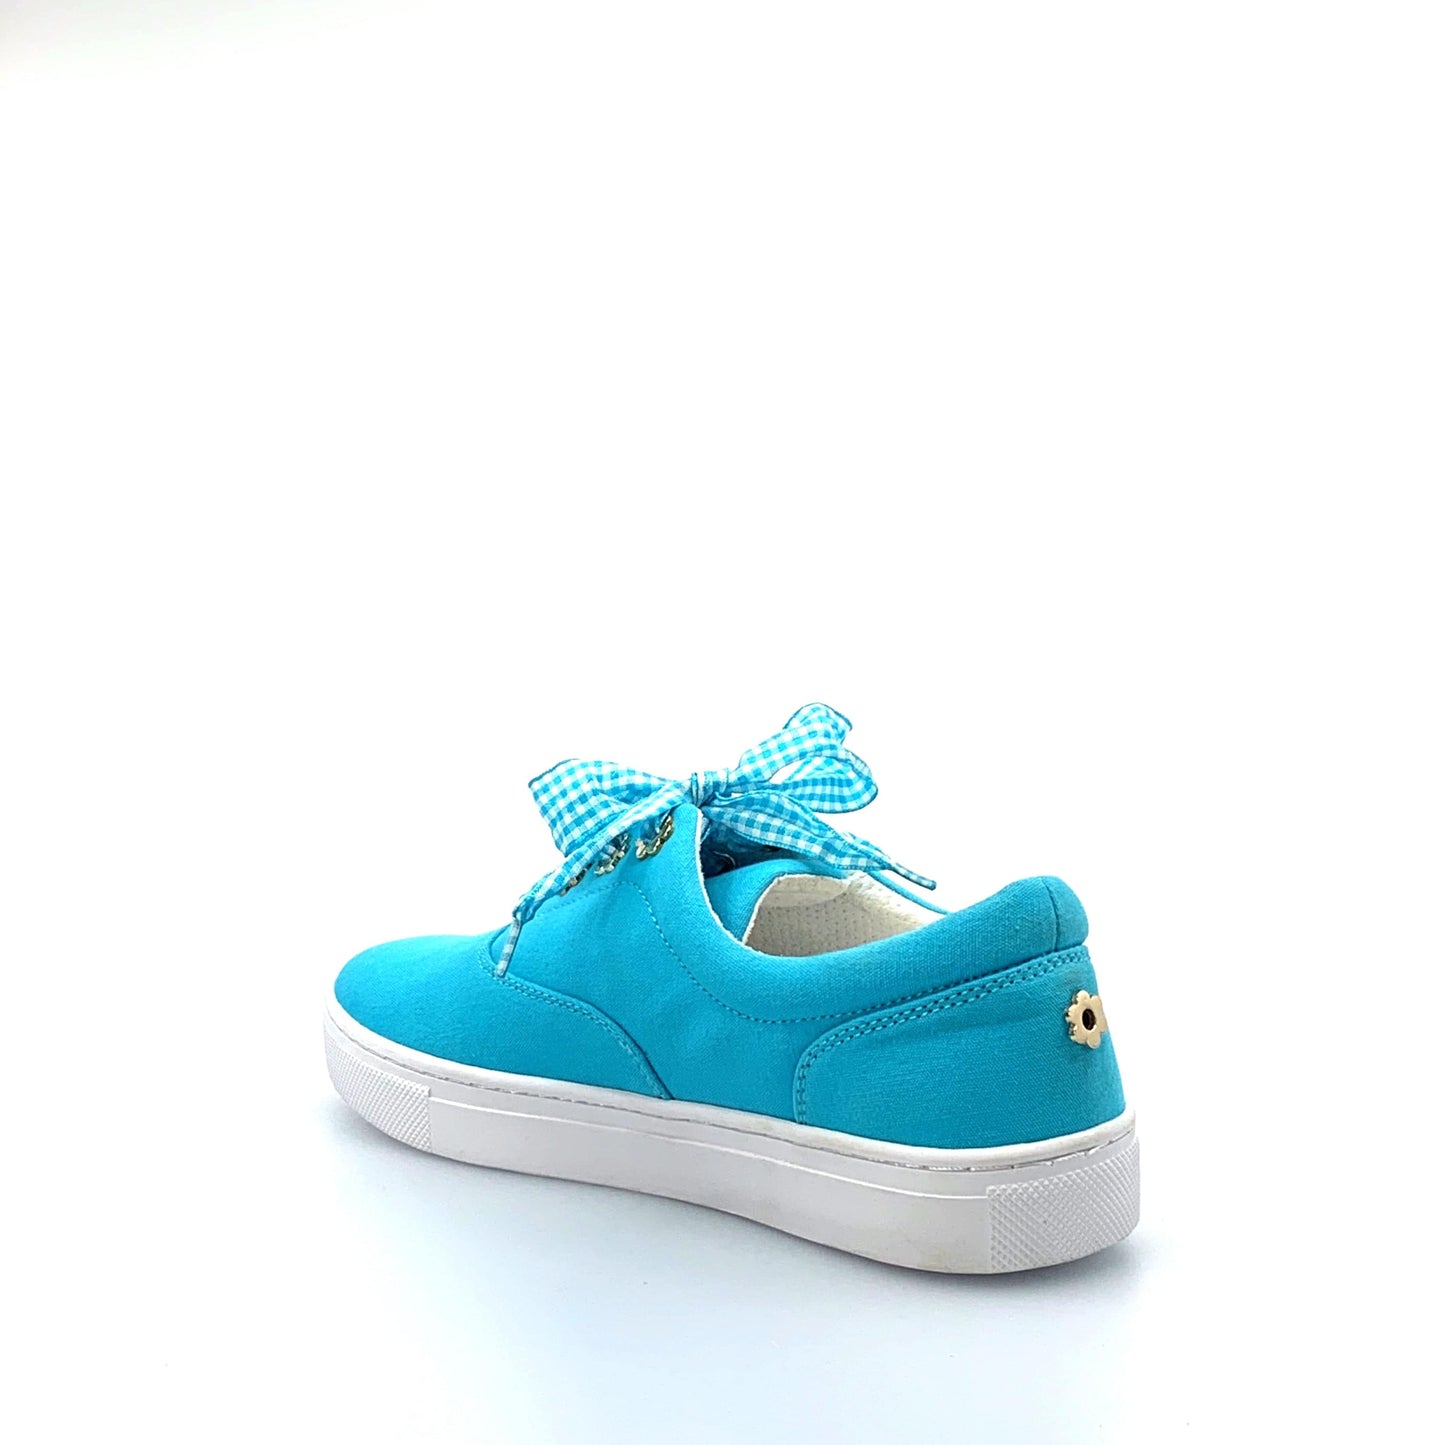 Isaac Mizrahi Womens Size 9M Blue Bobbie Sneakers Athletic Shoes